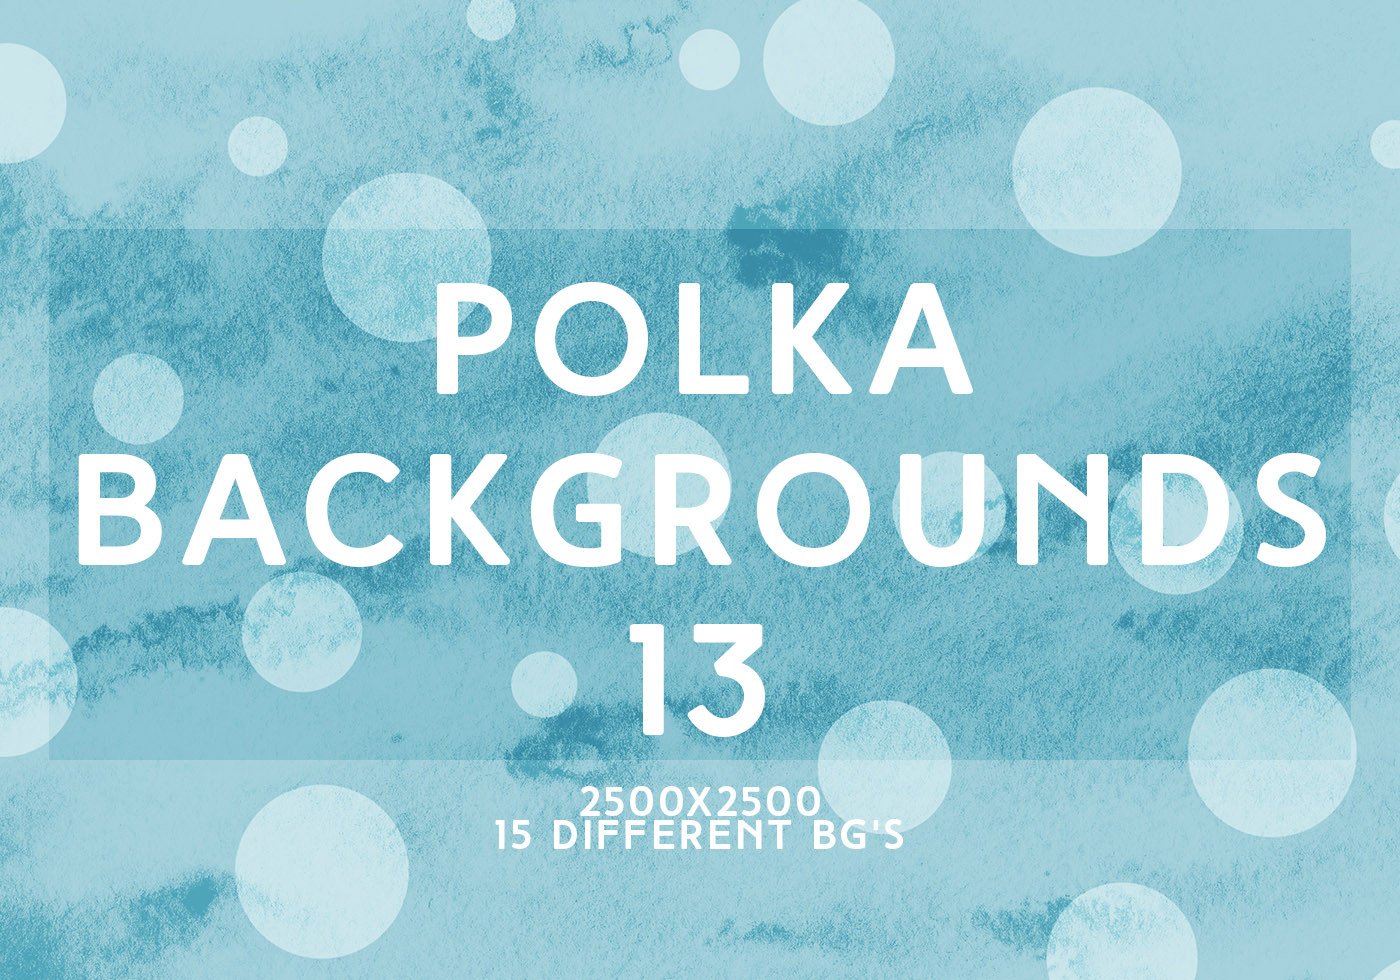 Polka Backgrounds 13 Free shop Brushes at Brusheezy